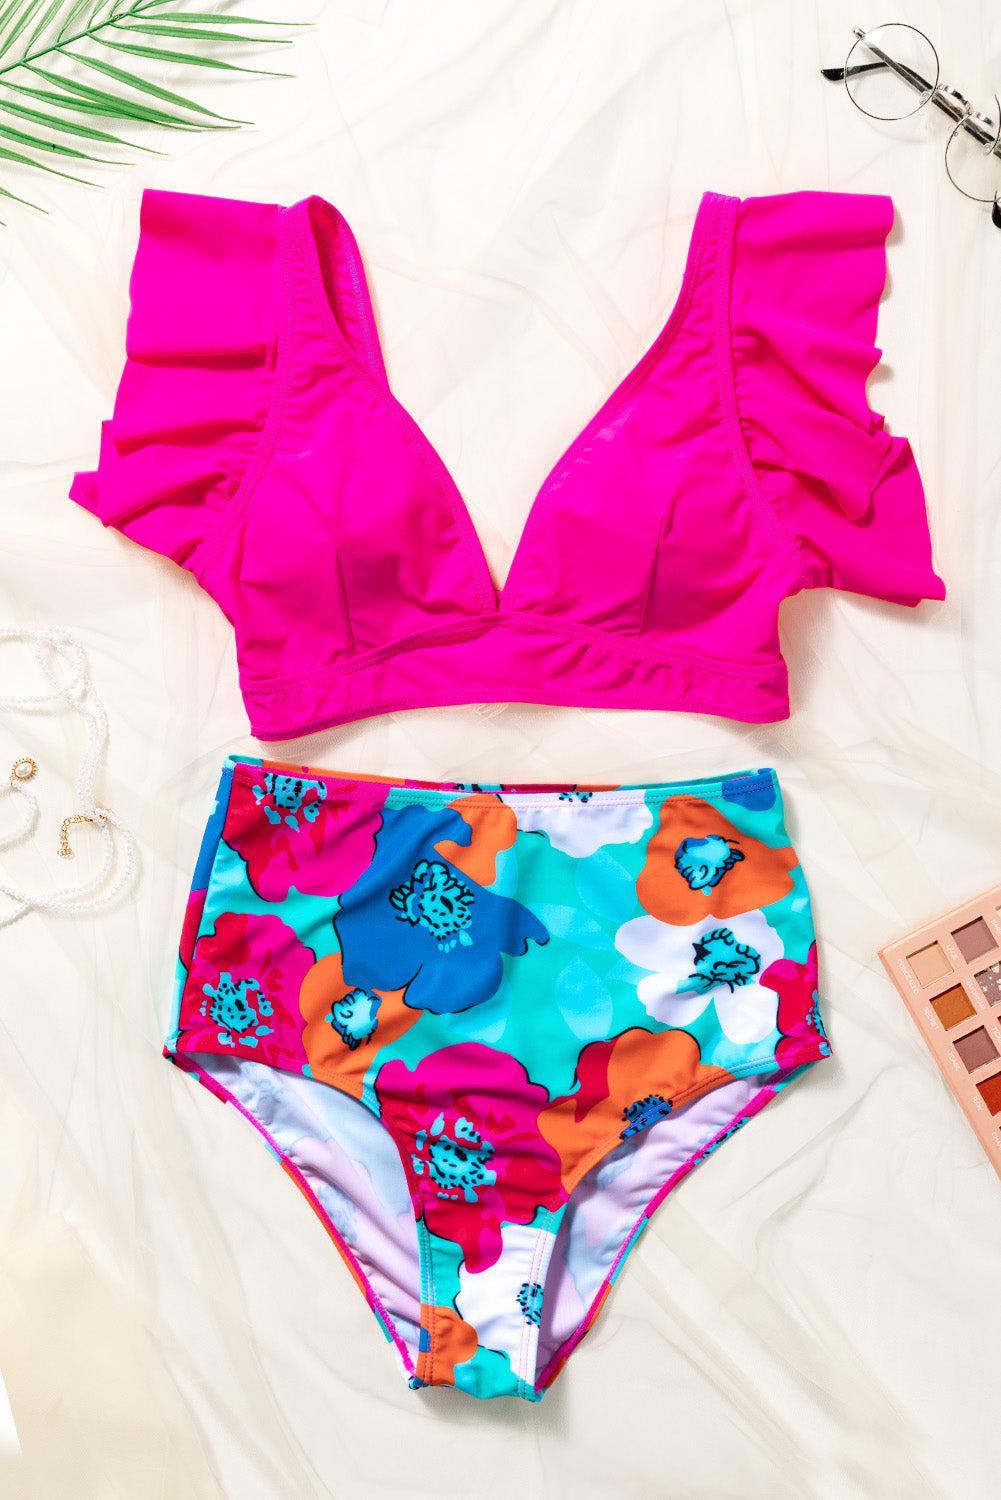 a bikini top and panties on a bed